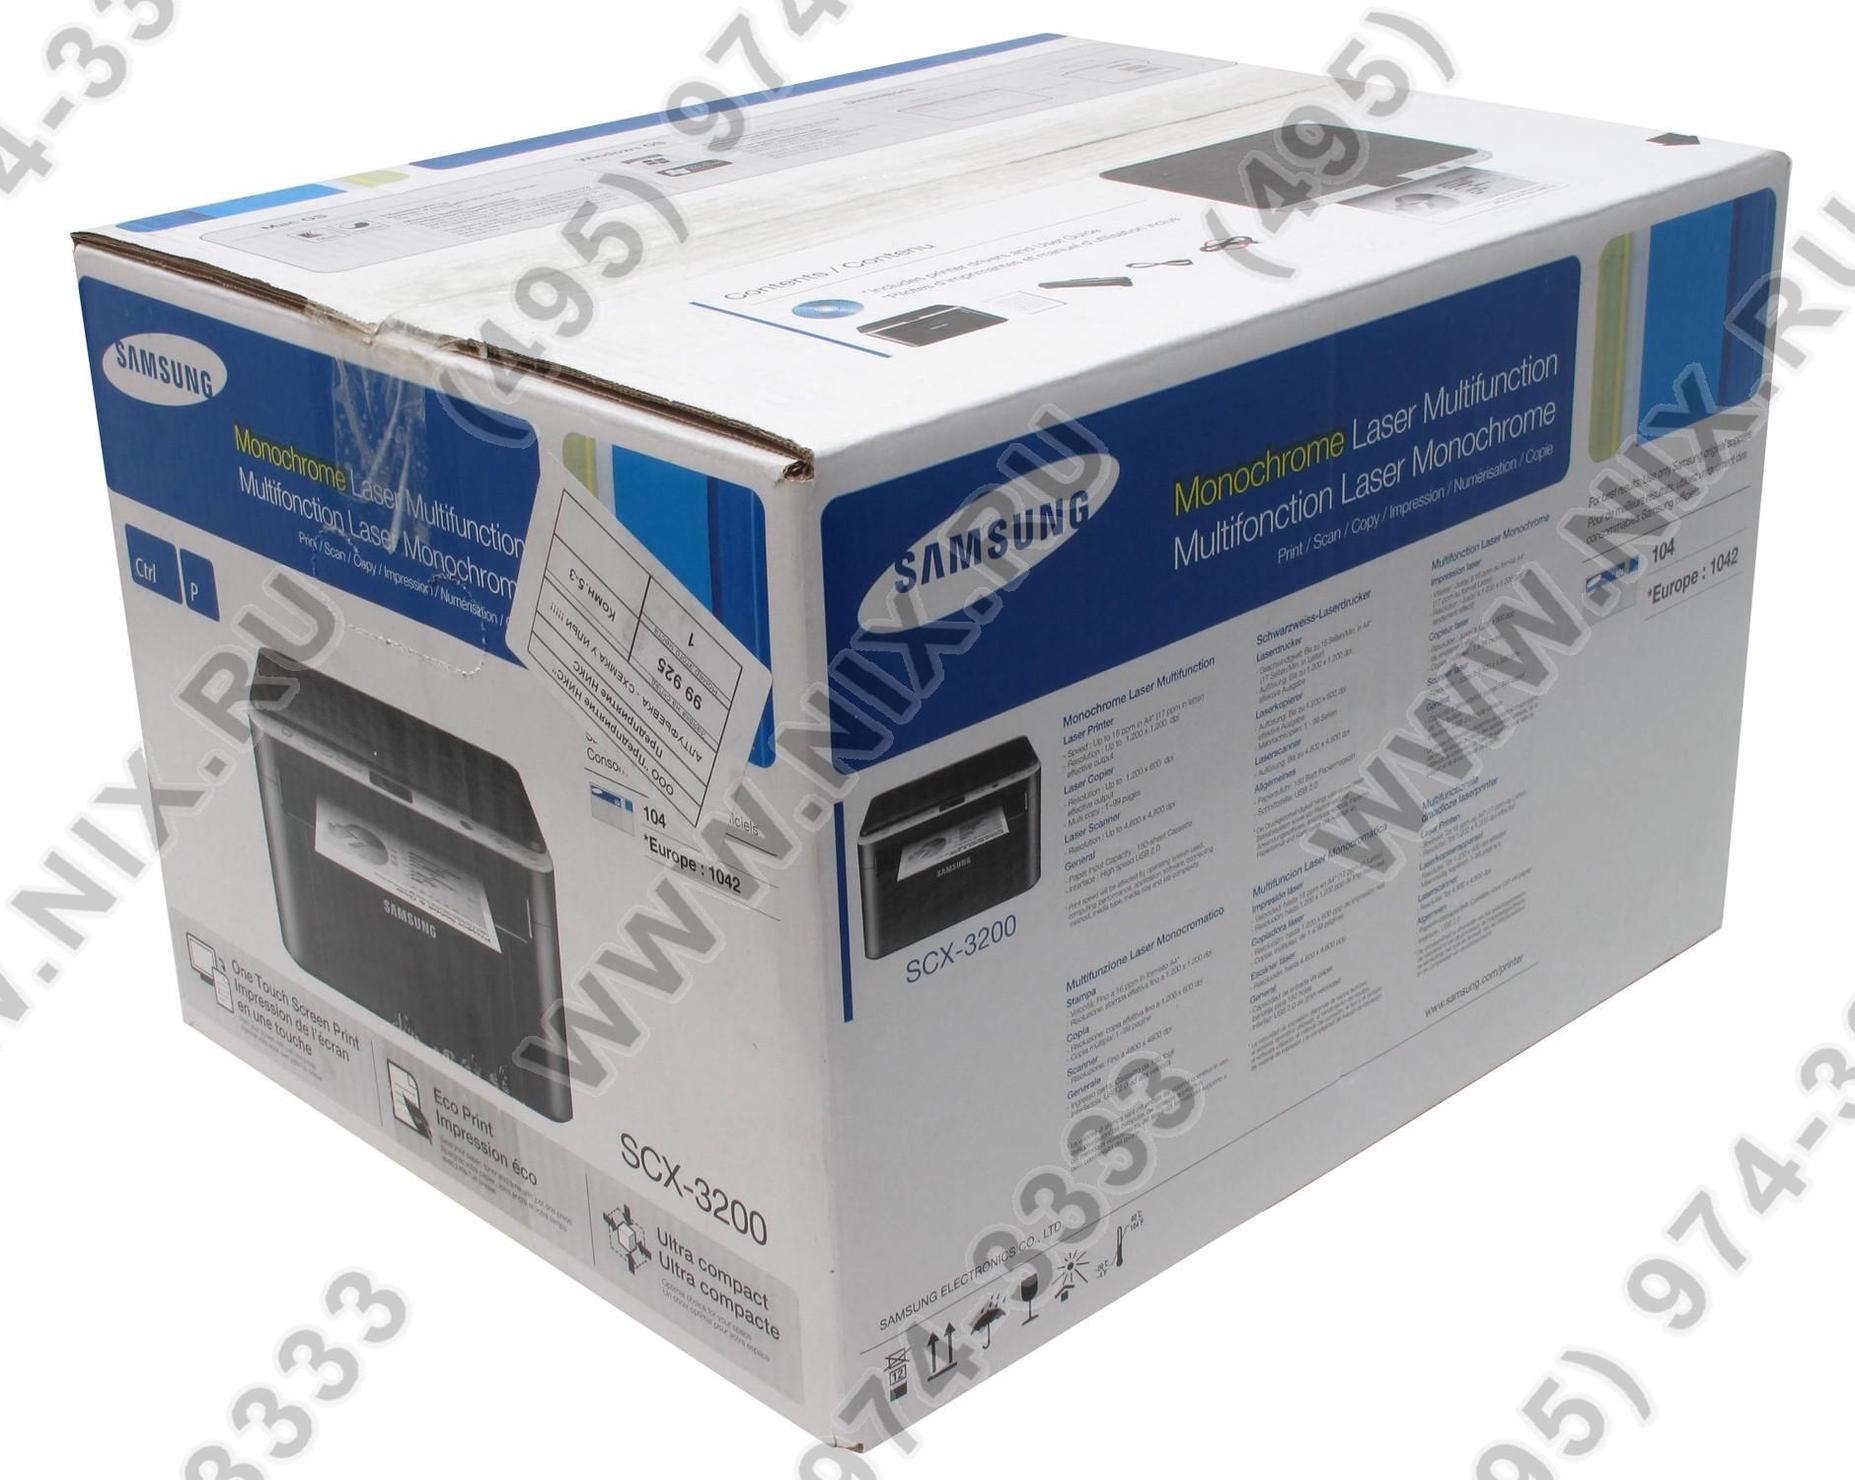 Samsung scx 3200 series. Samsung SCX 3200 /xev. Samsung SCX-3200, Ч/Б, a4. Samsung упаковка. Samsung SCX-3200 фото.